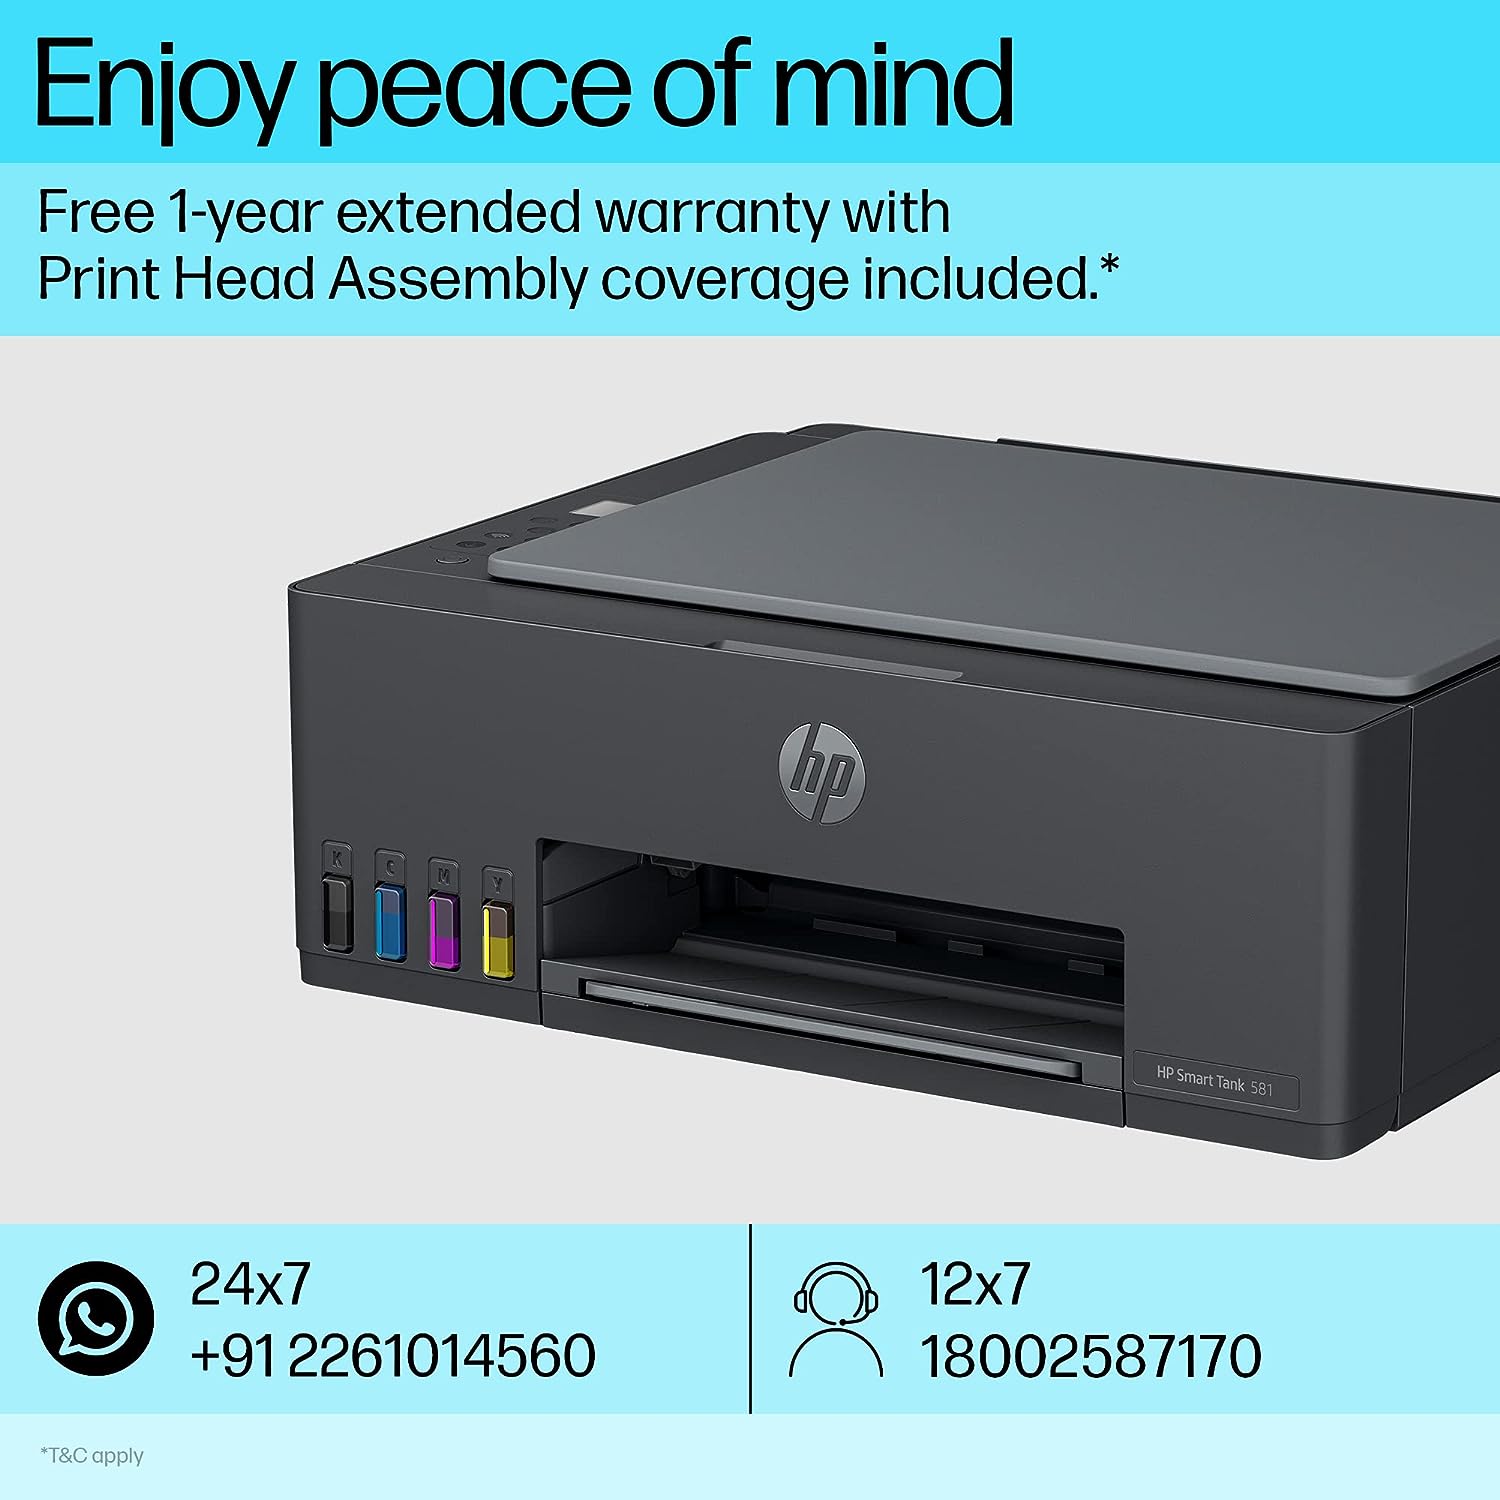 HP Smart Tank 581 AIO - 12ppm / 4800dpi / A4 / USB / Wi-Fi / Bluetooth / Color Inkjet - Printer